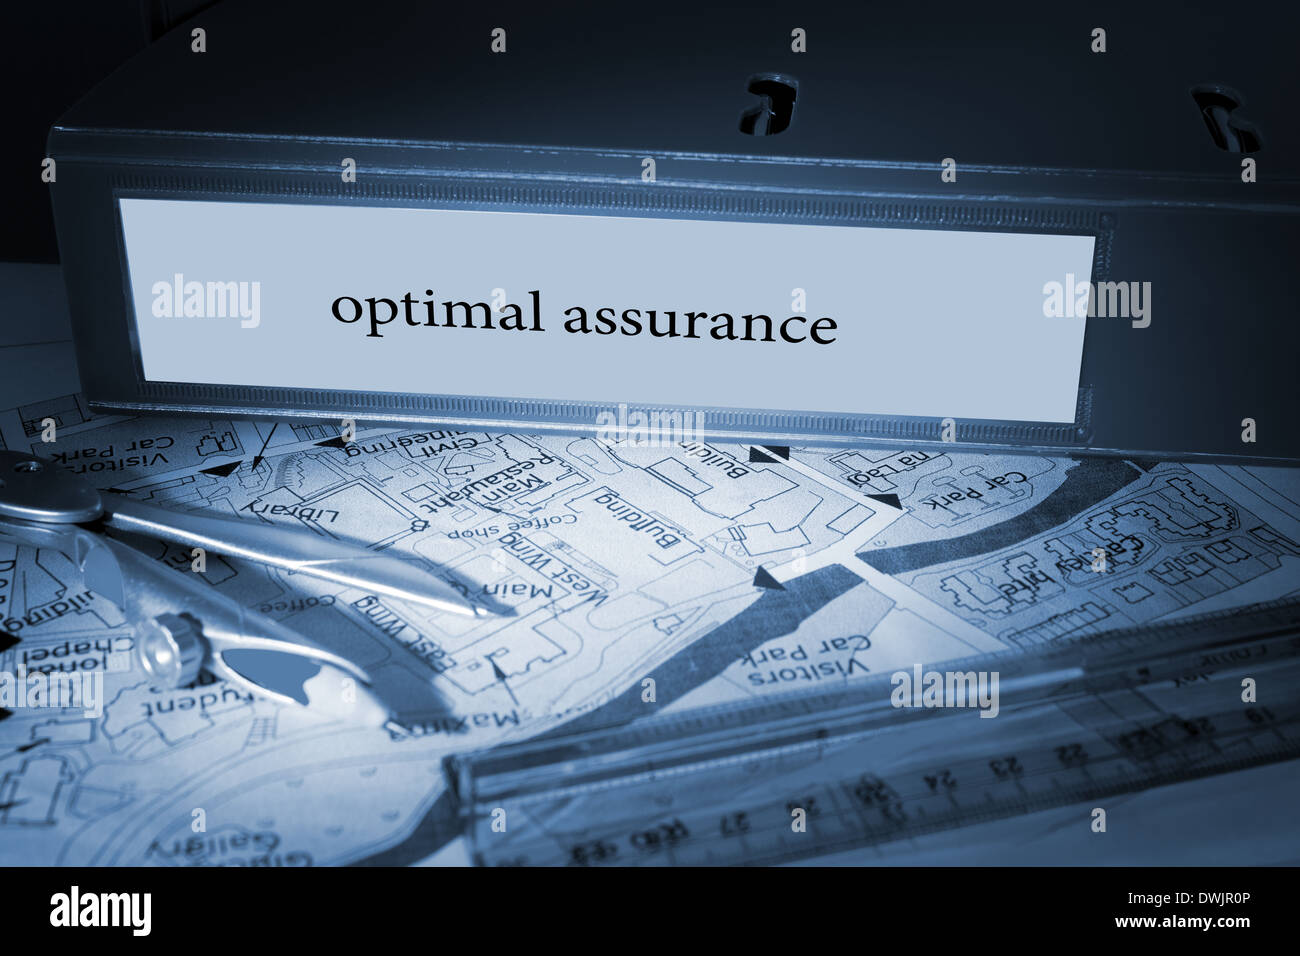 Optimal assurance on blue business binder Stock Photo